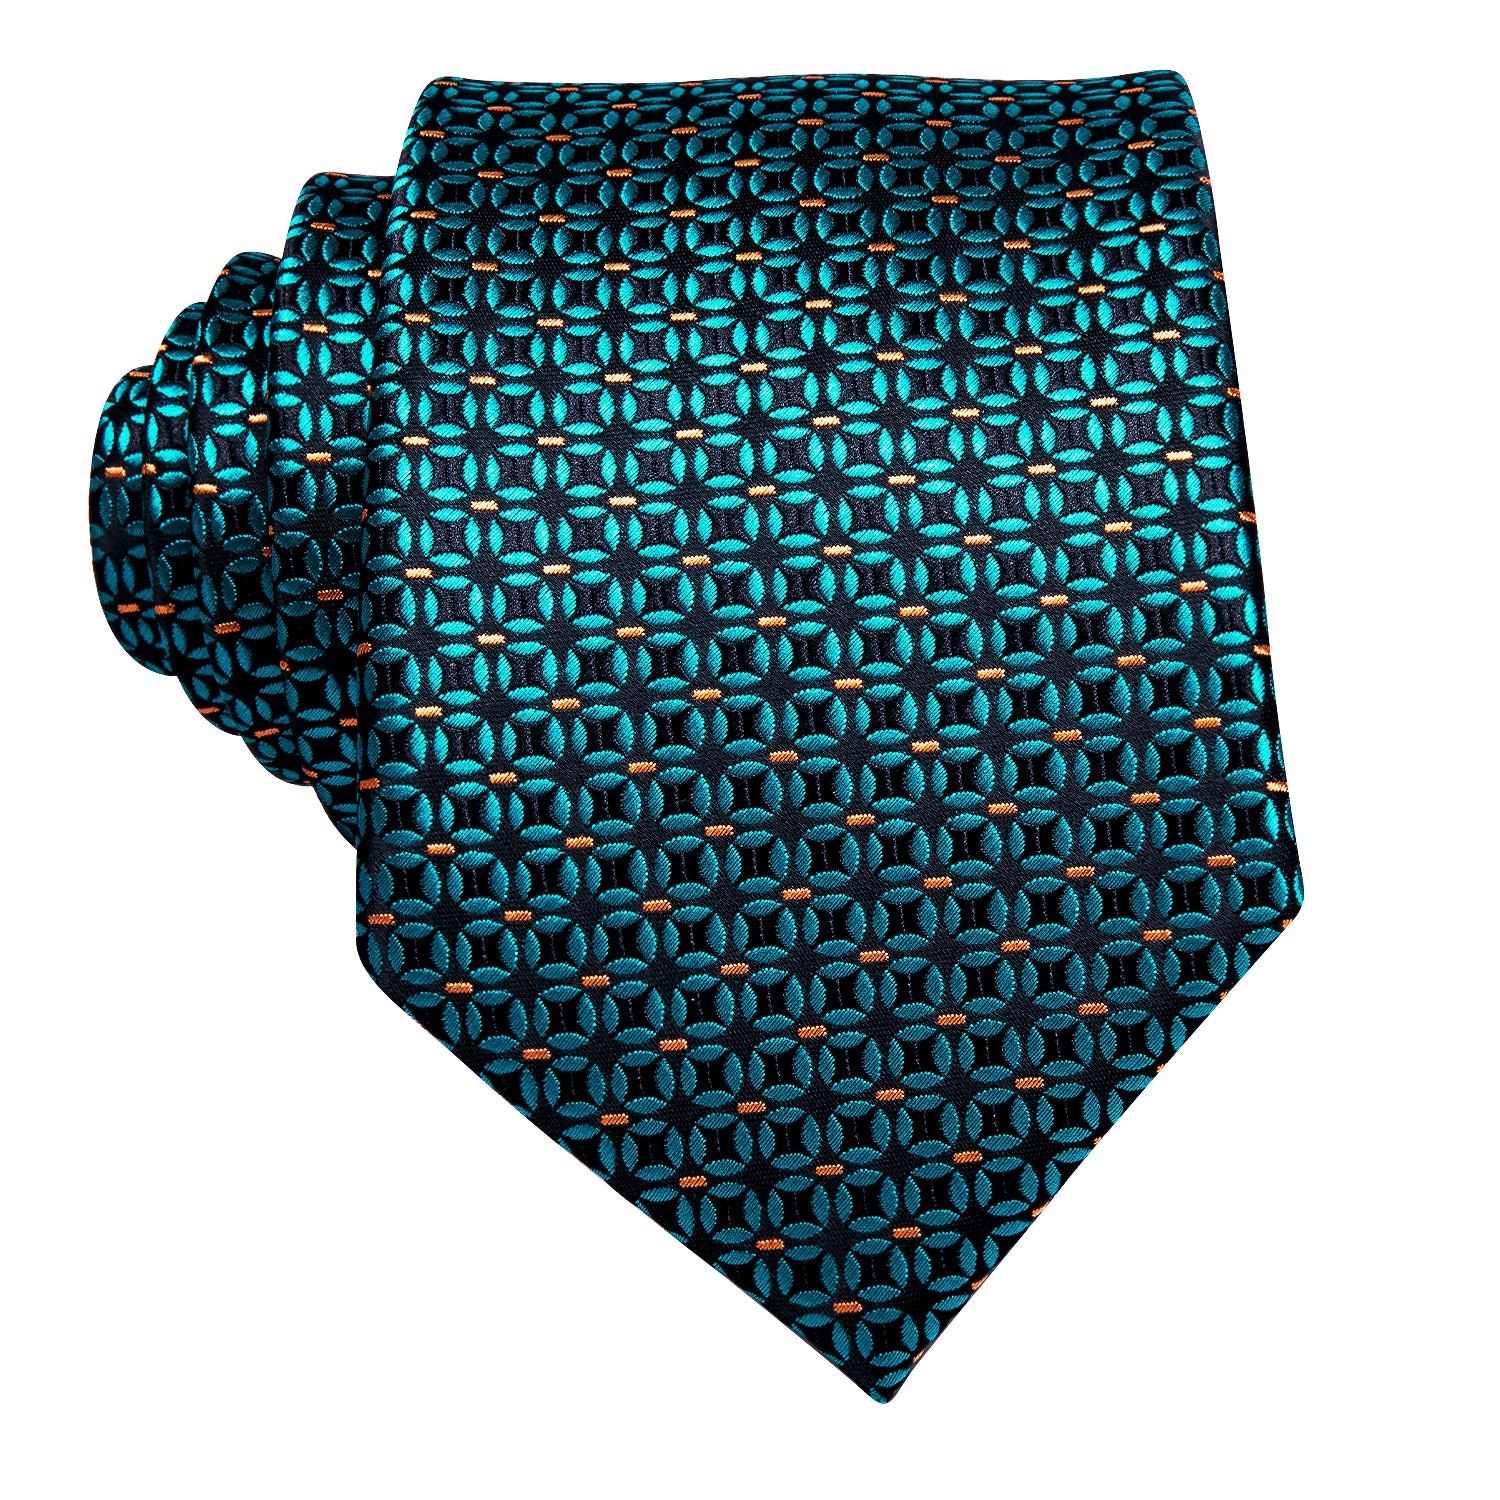 Turquoise Polka Dot Tie Pocket Square Cufflinks Set